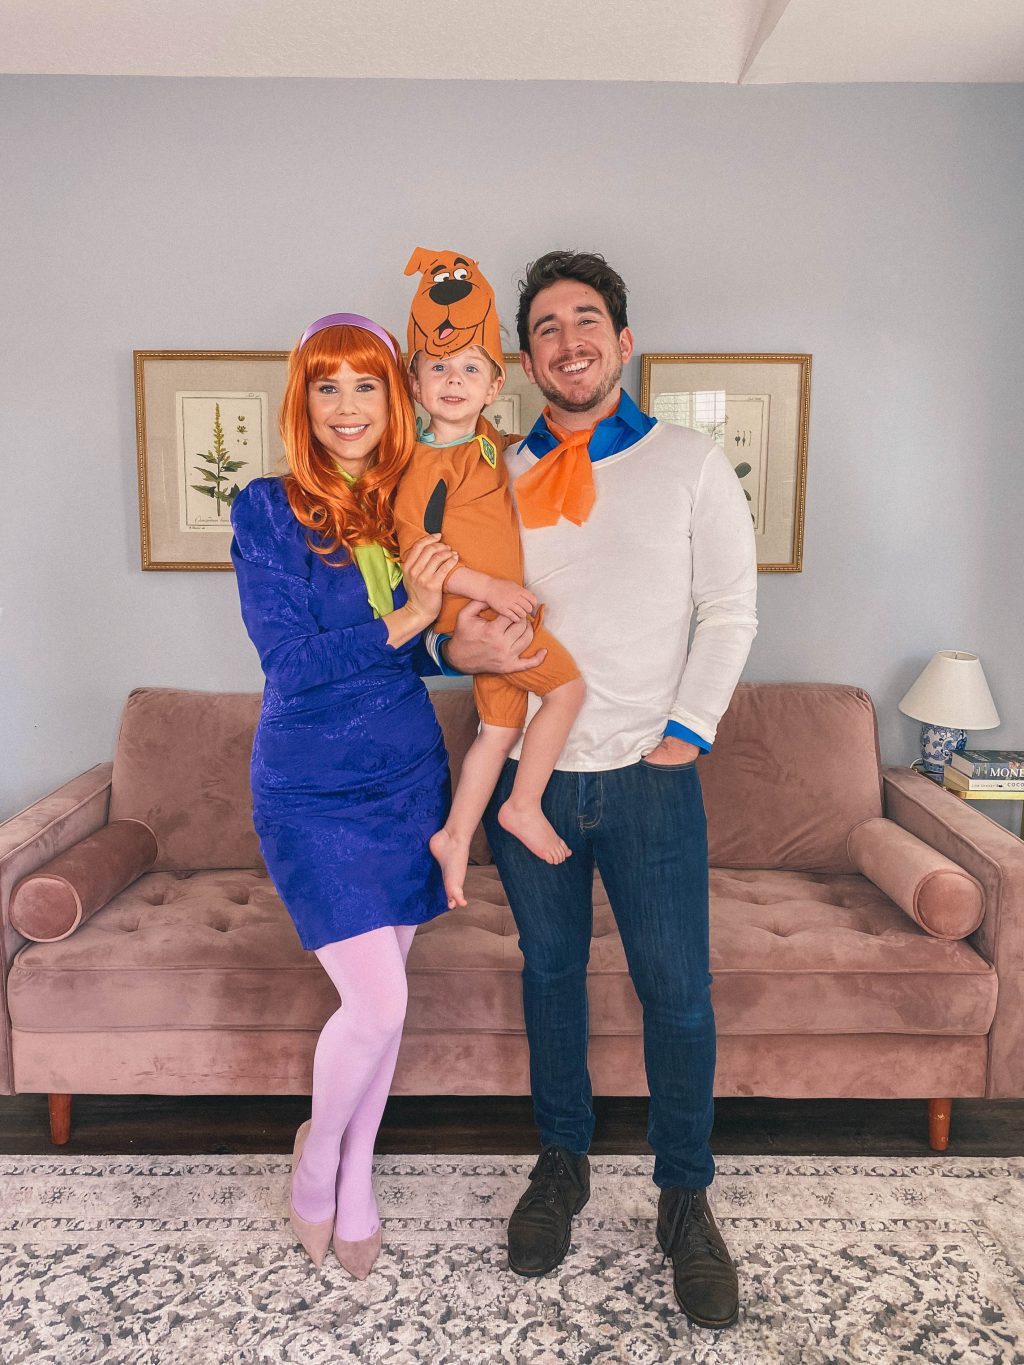 15 Creative Family Halloween Costume Ideas for 2021